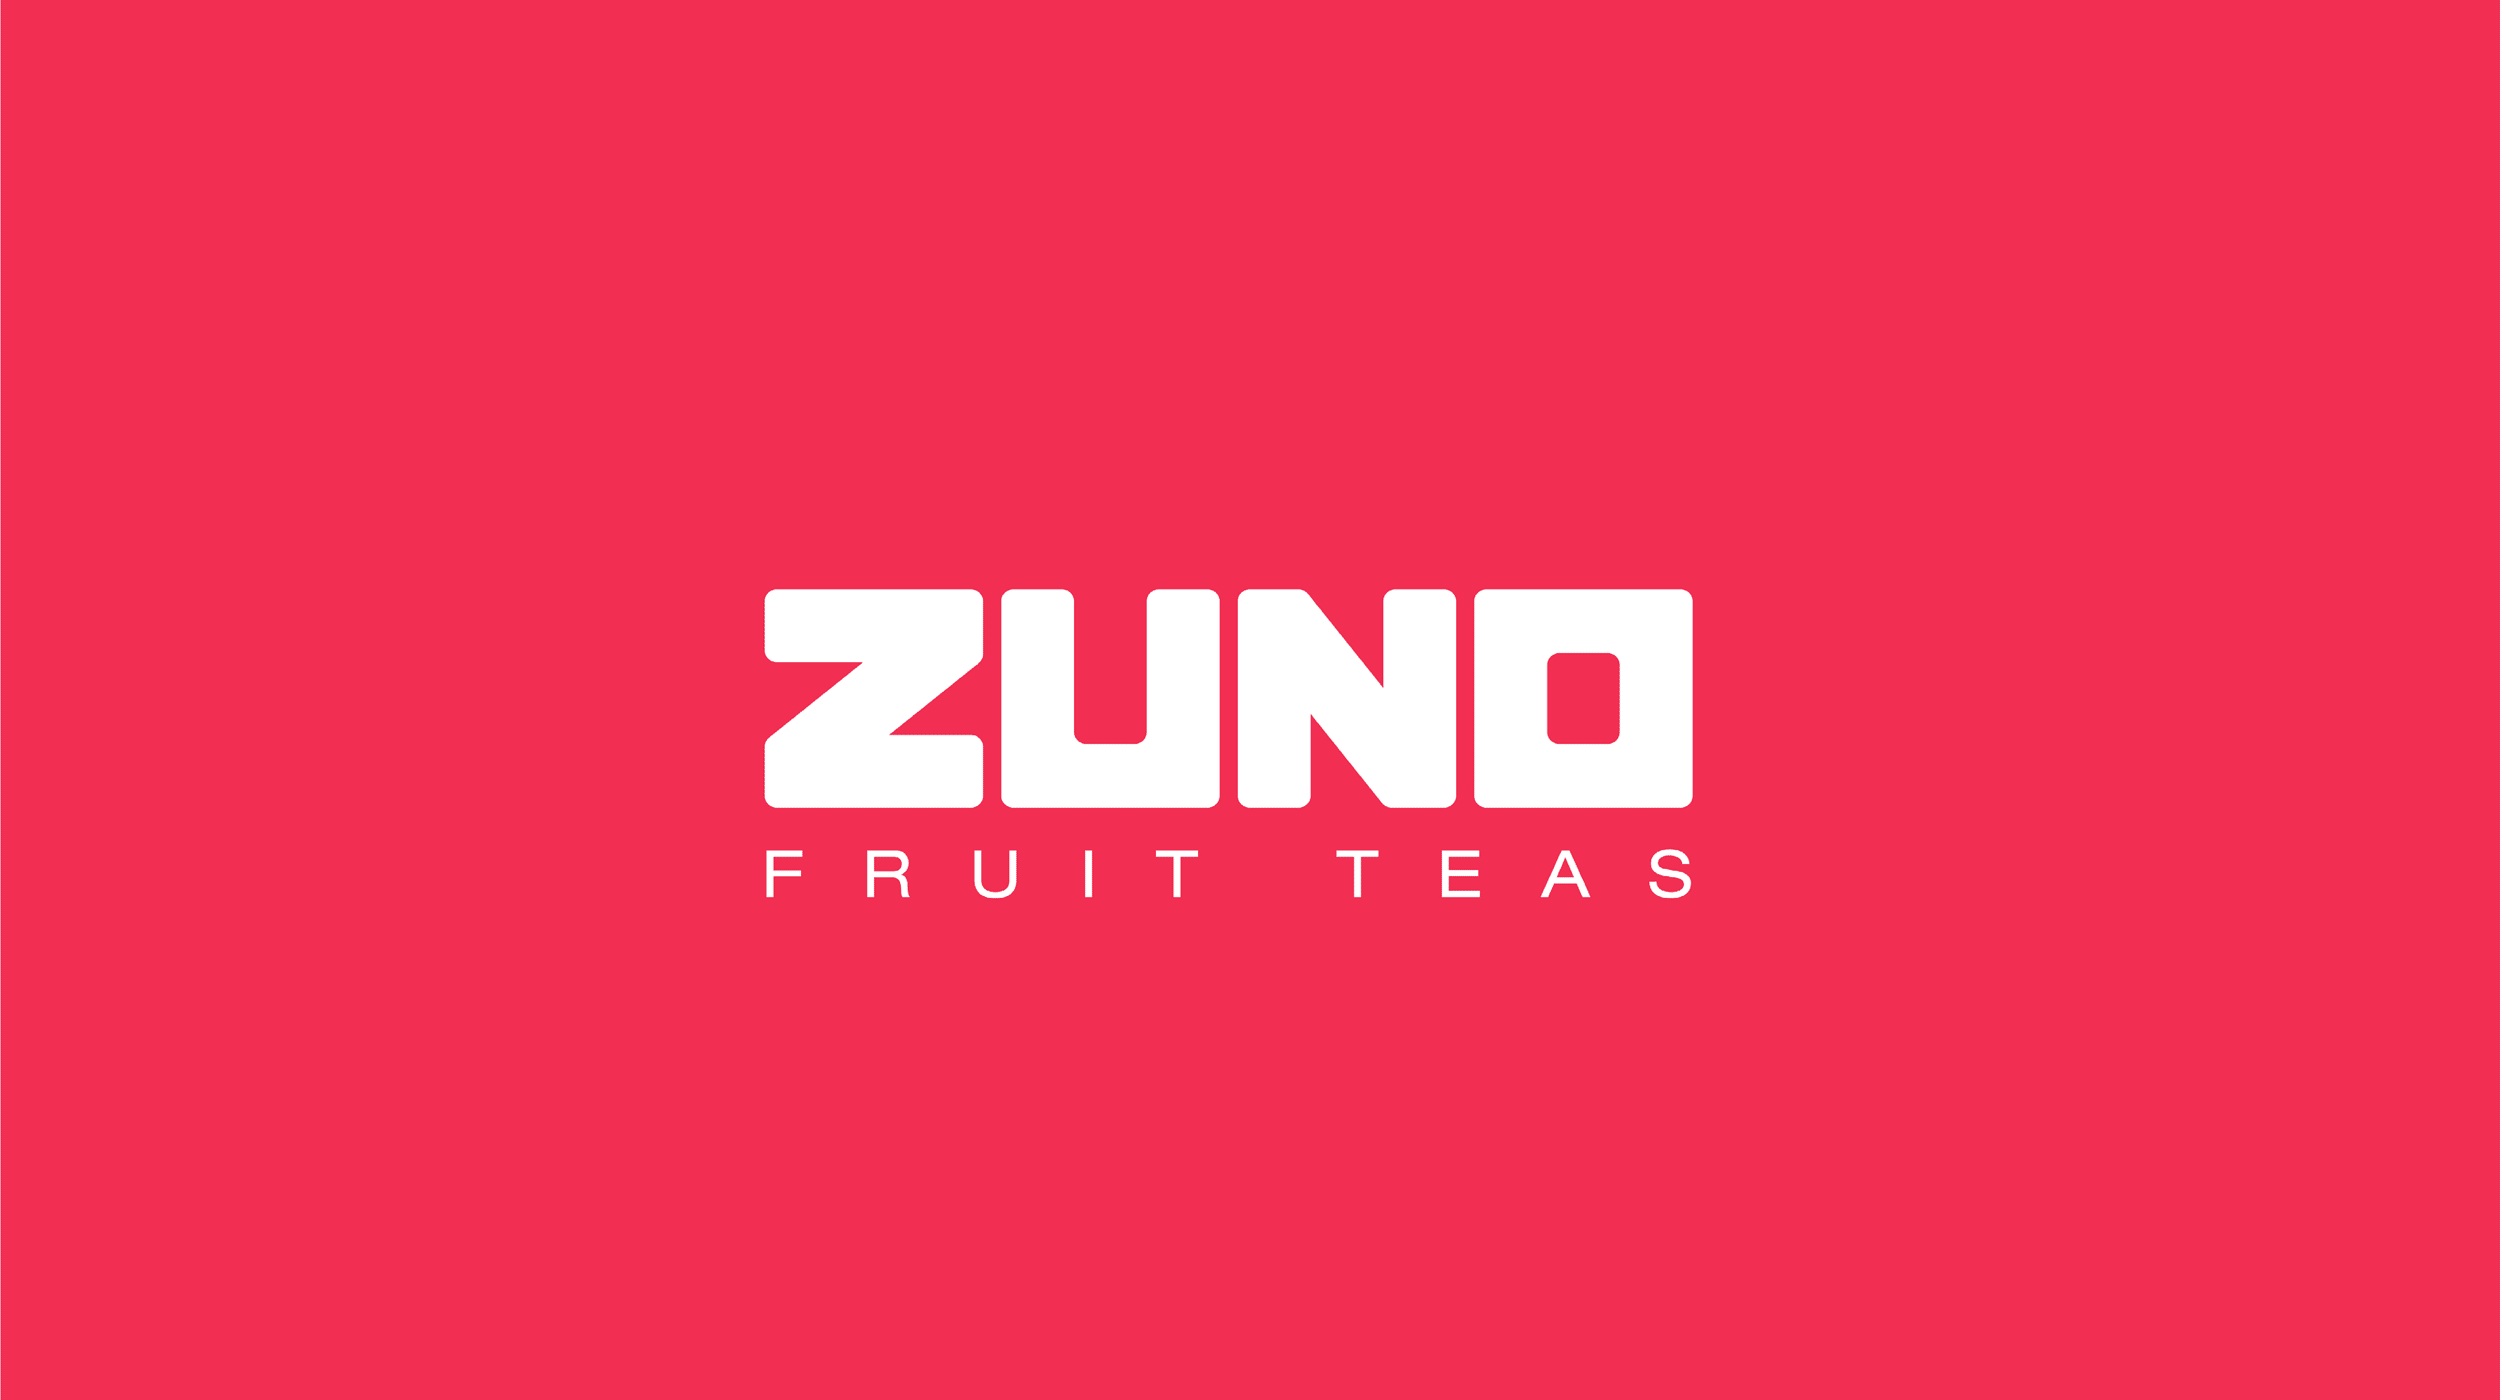 Zuno fruit teas logo